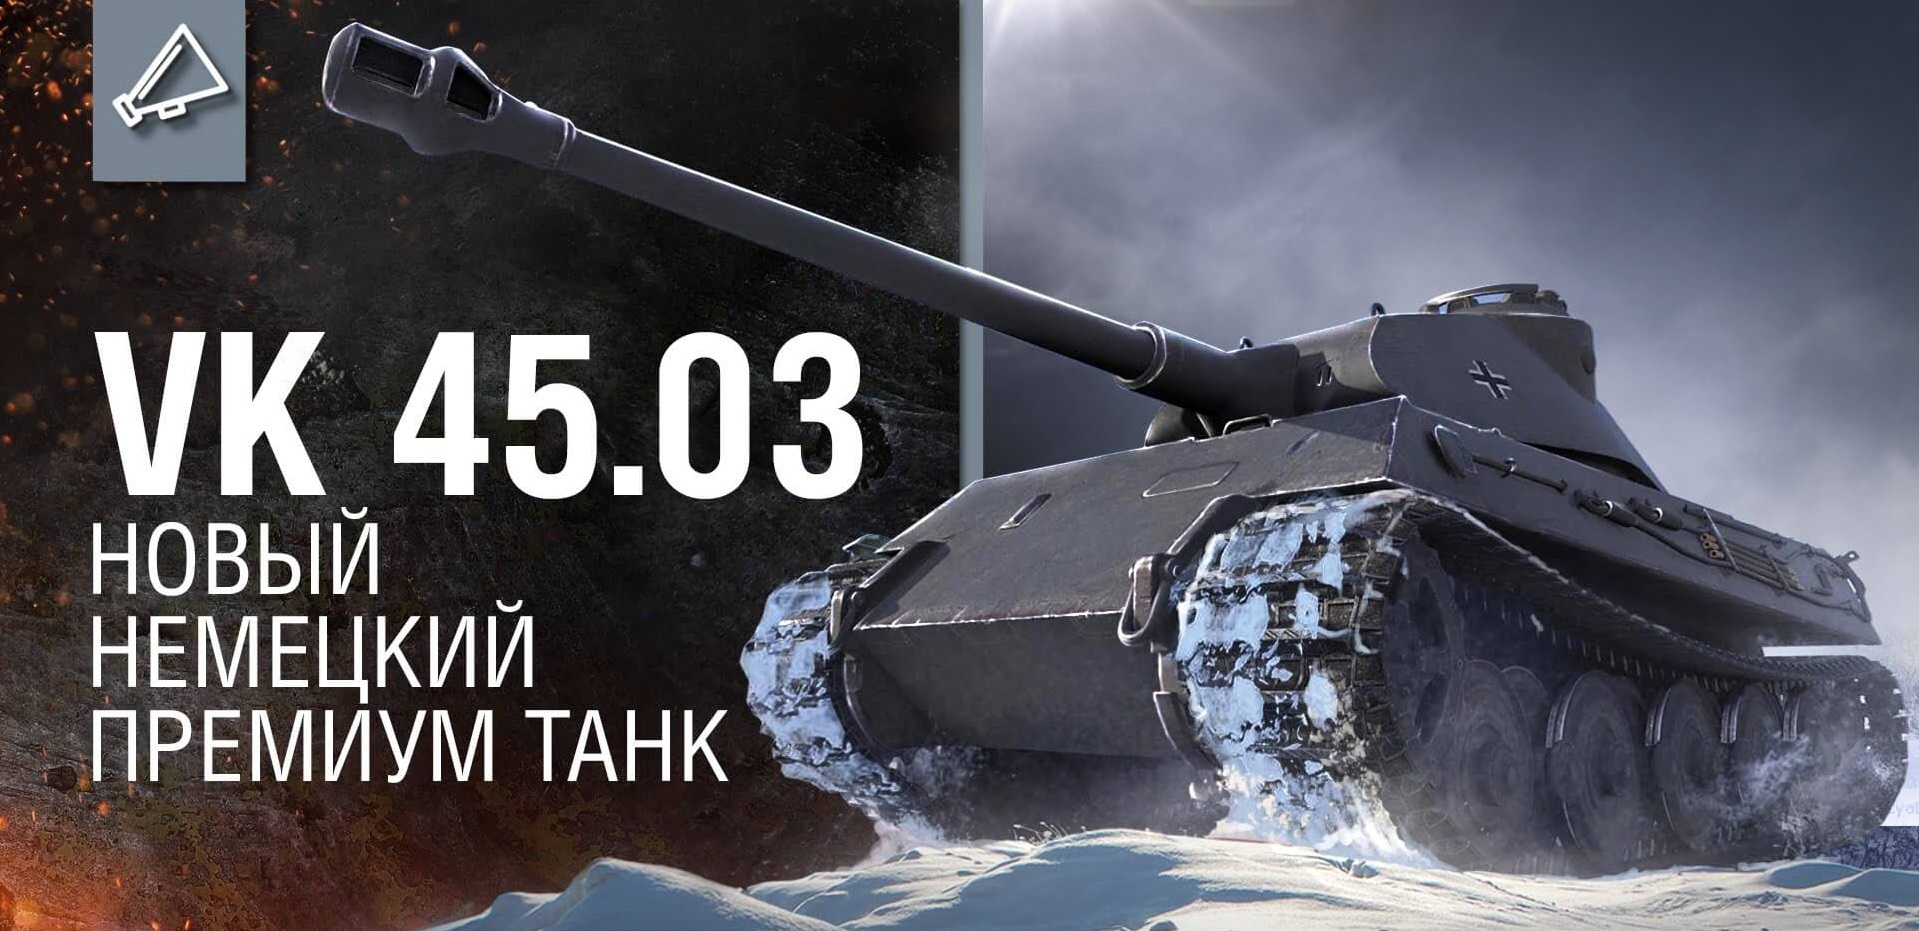 VK 45.03 "Tiger III:   "